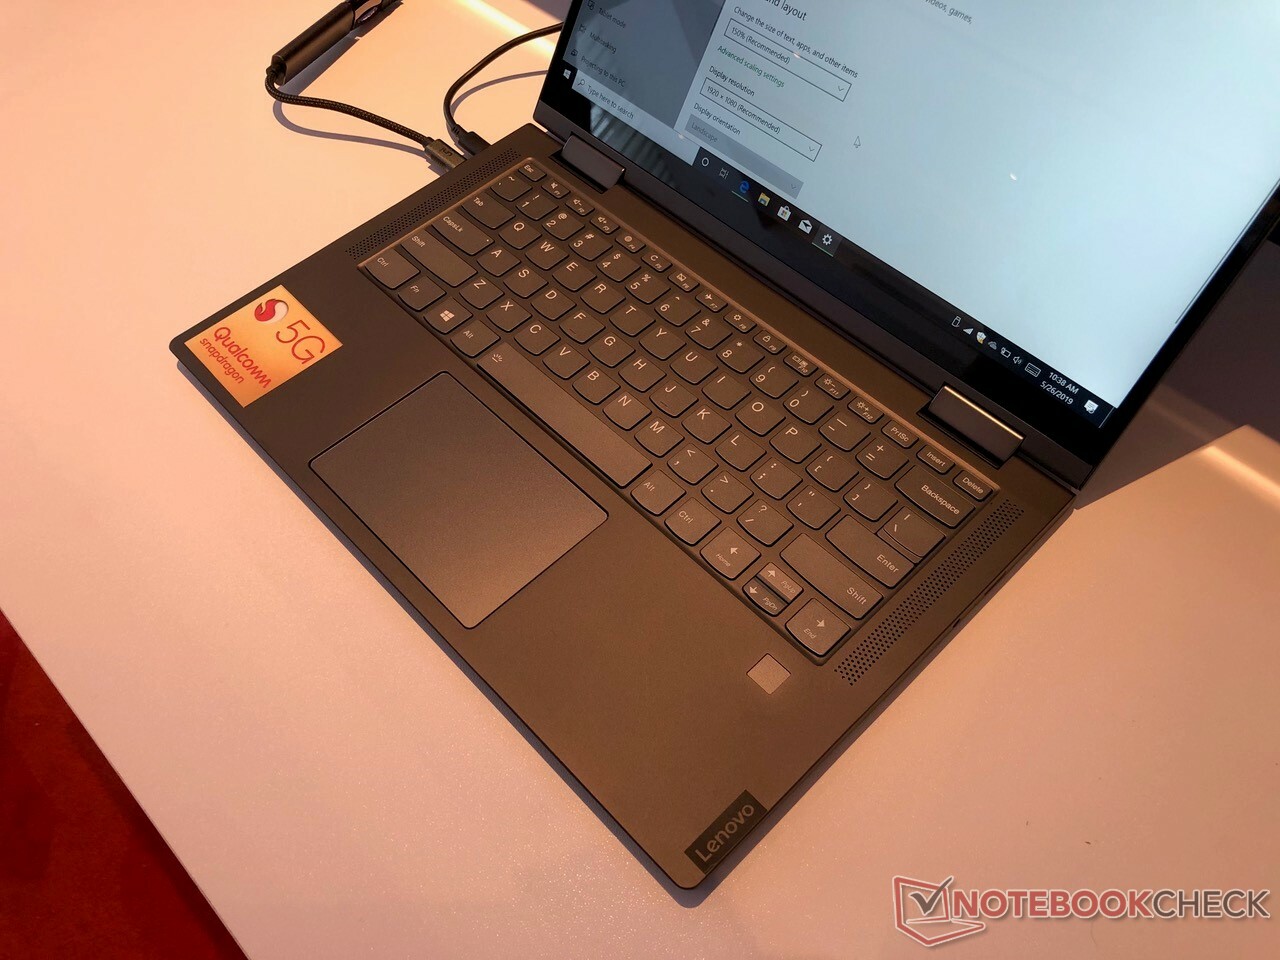 Lenovo announces ultra-portable 5G laptop powered by Snapdragon 8cx processor